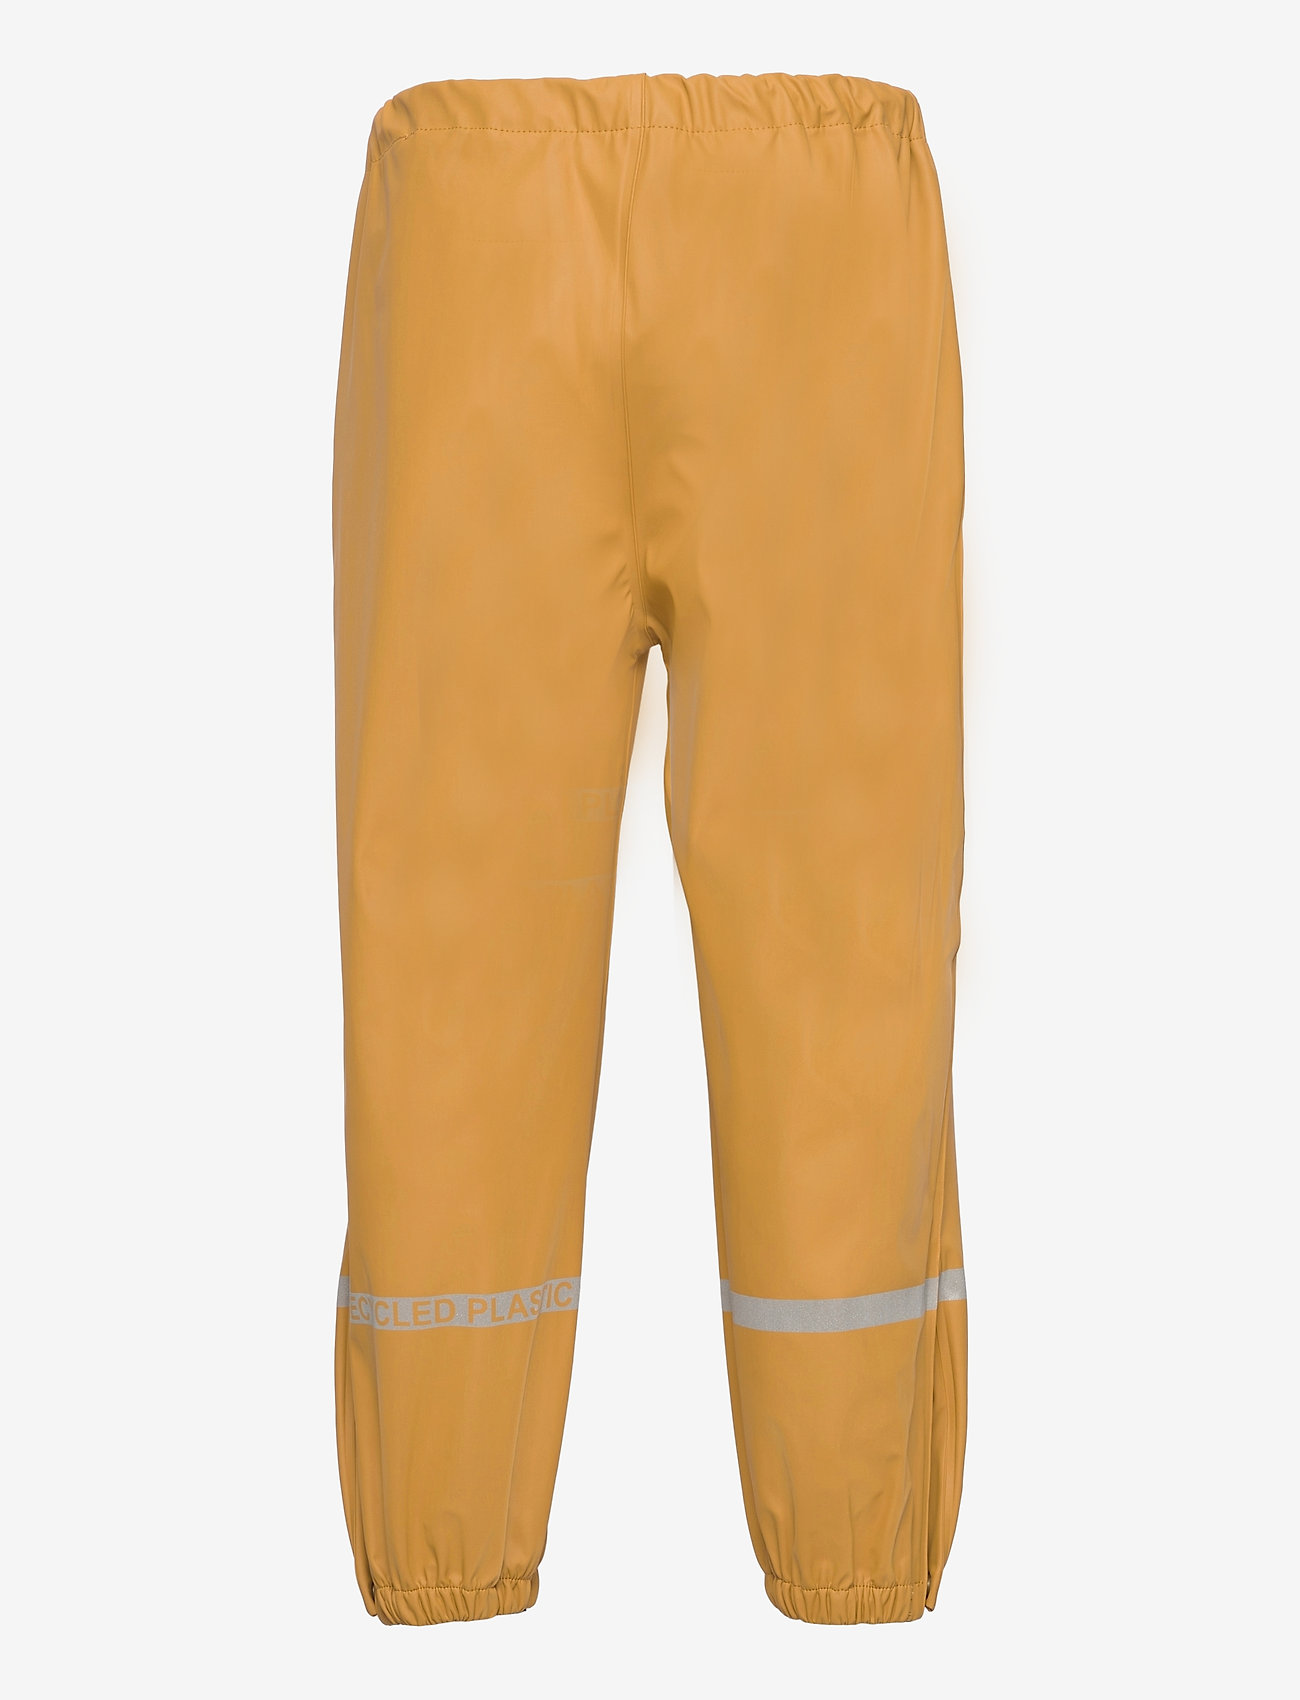 mikk-line - PU Rain Pants / Susp 104 - regnbukser - honey mustard - 1